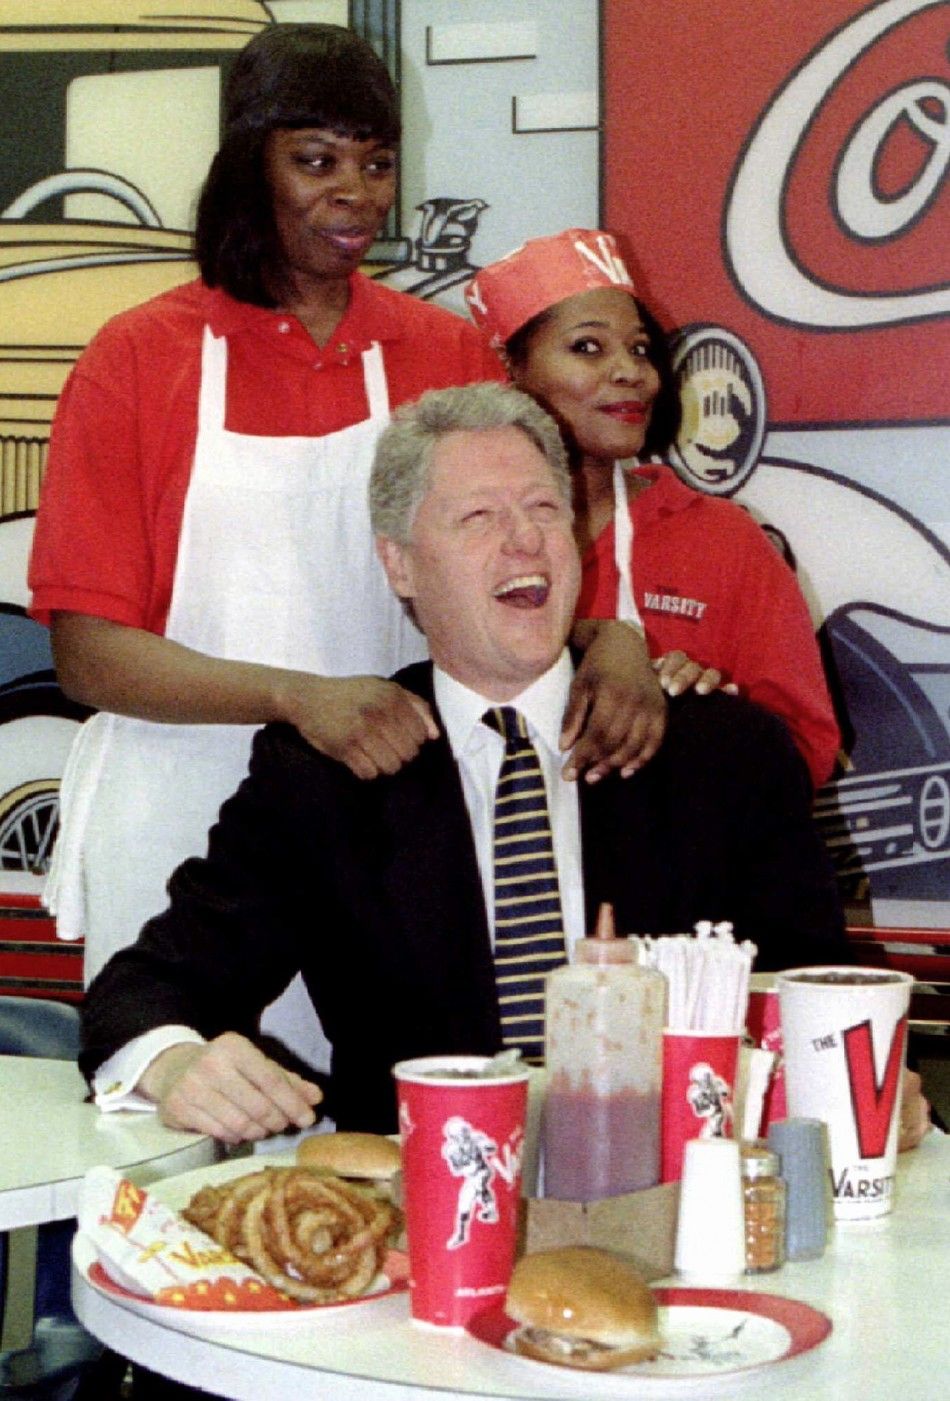 Bill Clinton and Fast Food